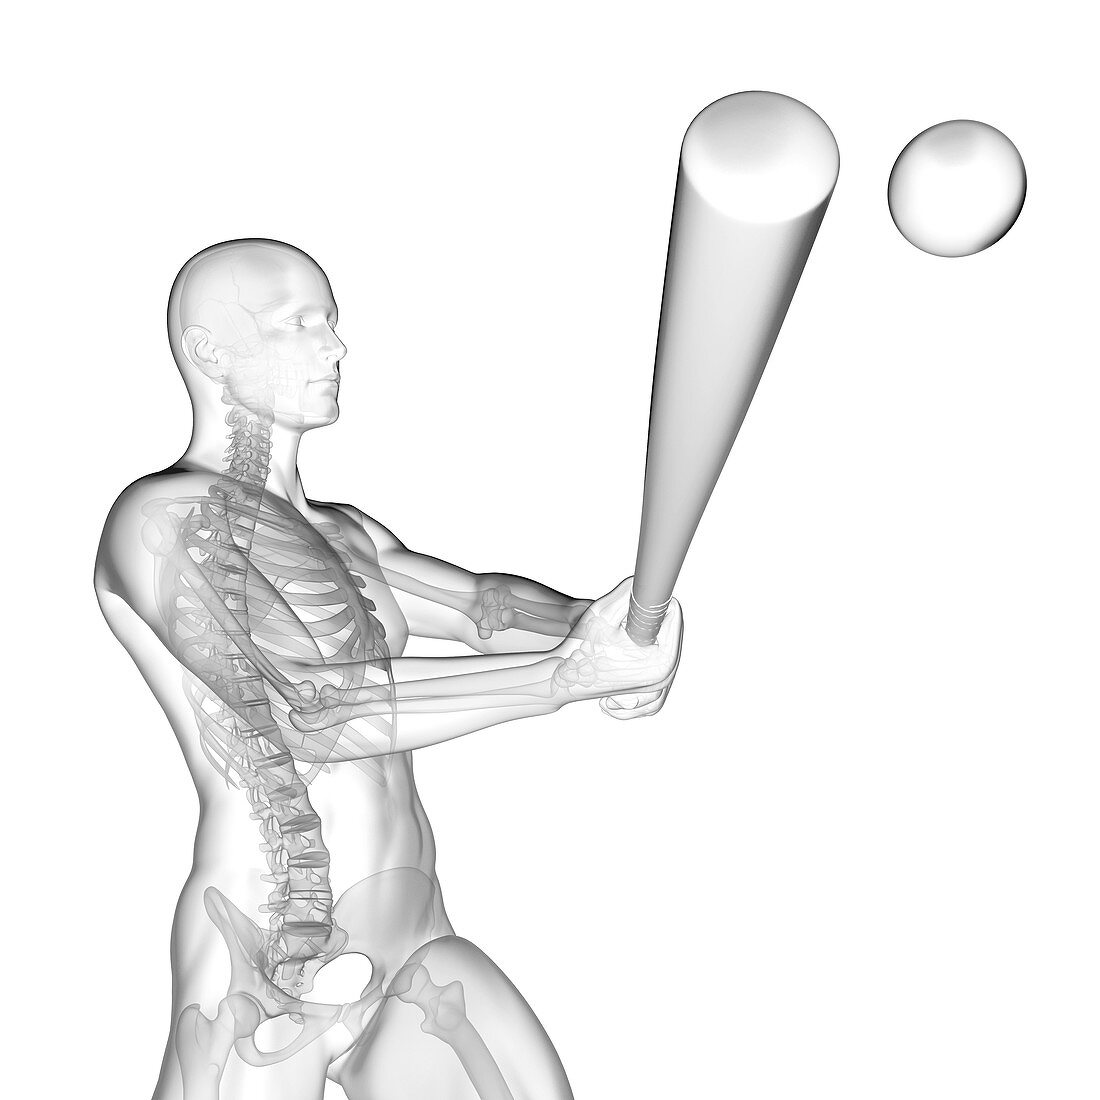 Person using baseball bat, skeletal structure, illustration